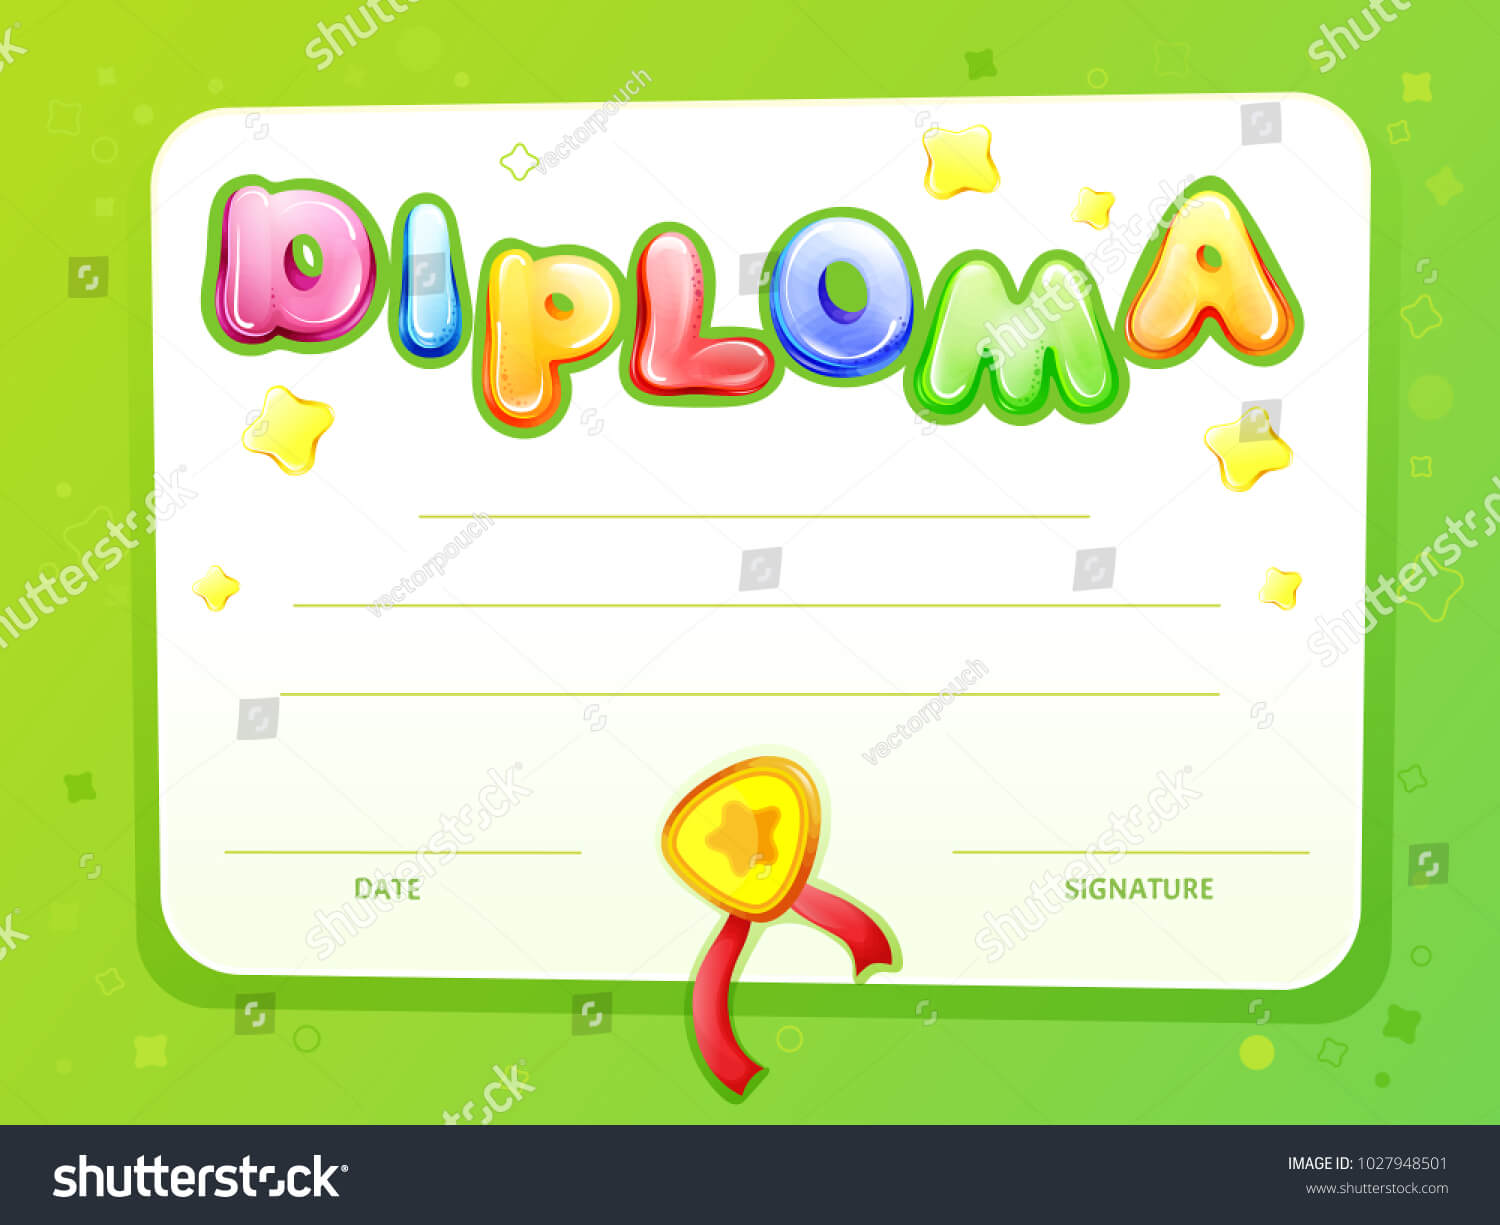 Стоковая Векторная Графика «Cartoon Kids Certificate Diploma Regarding Certificate Of Achievement Template For Kids